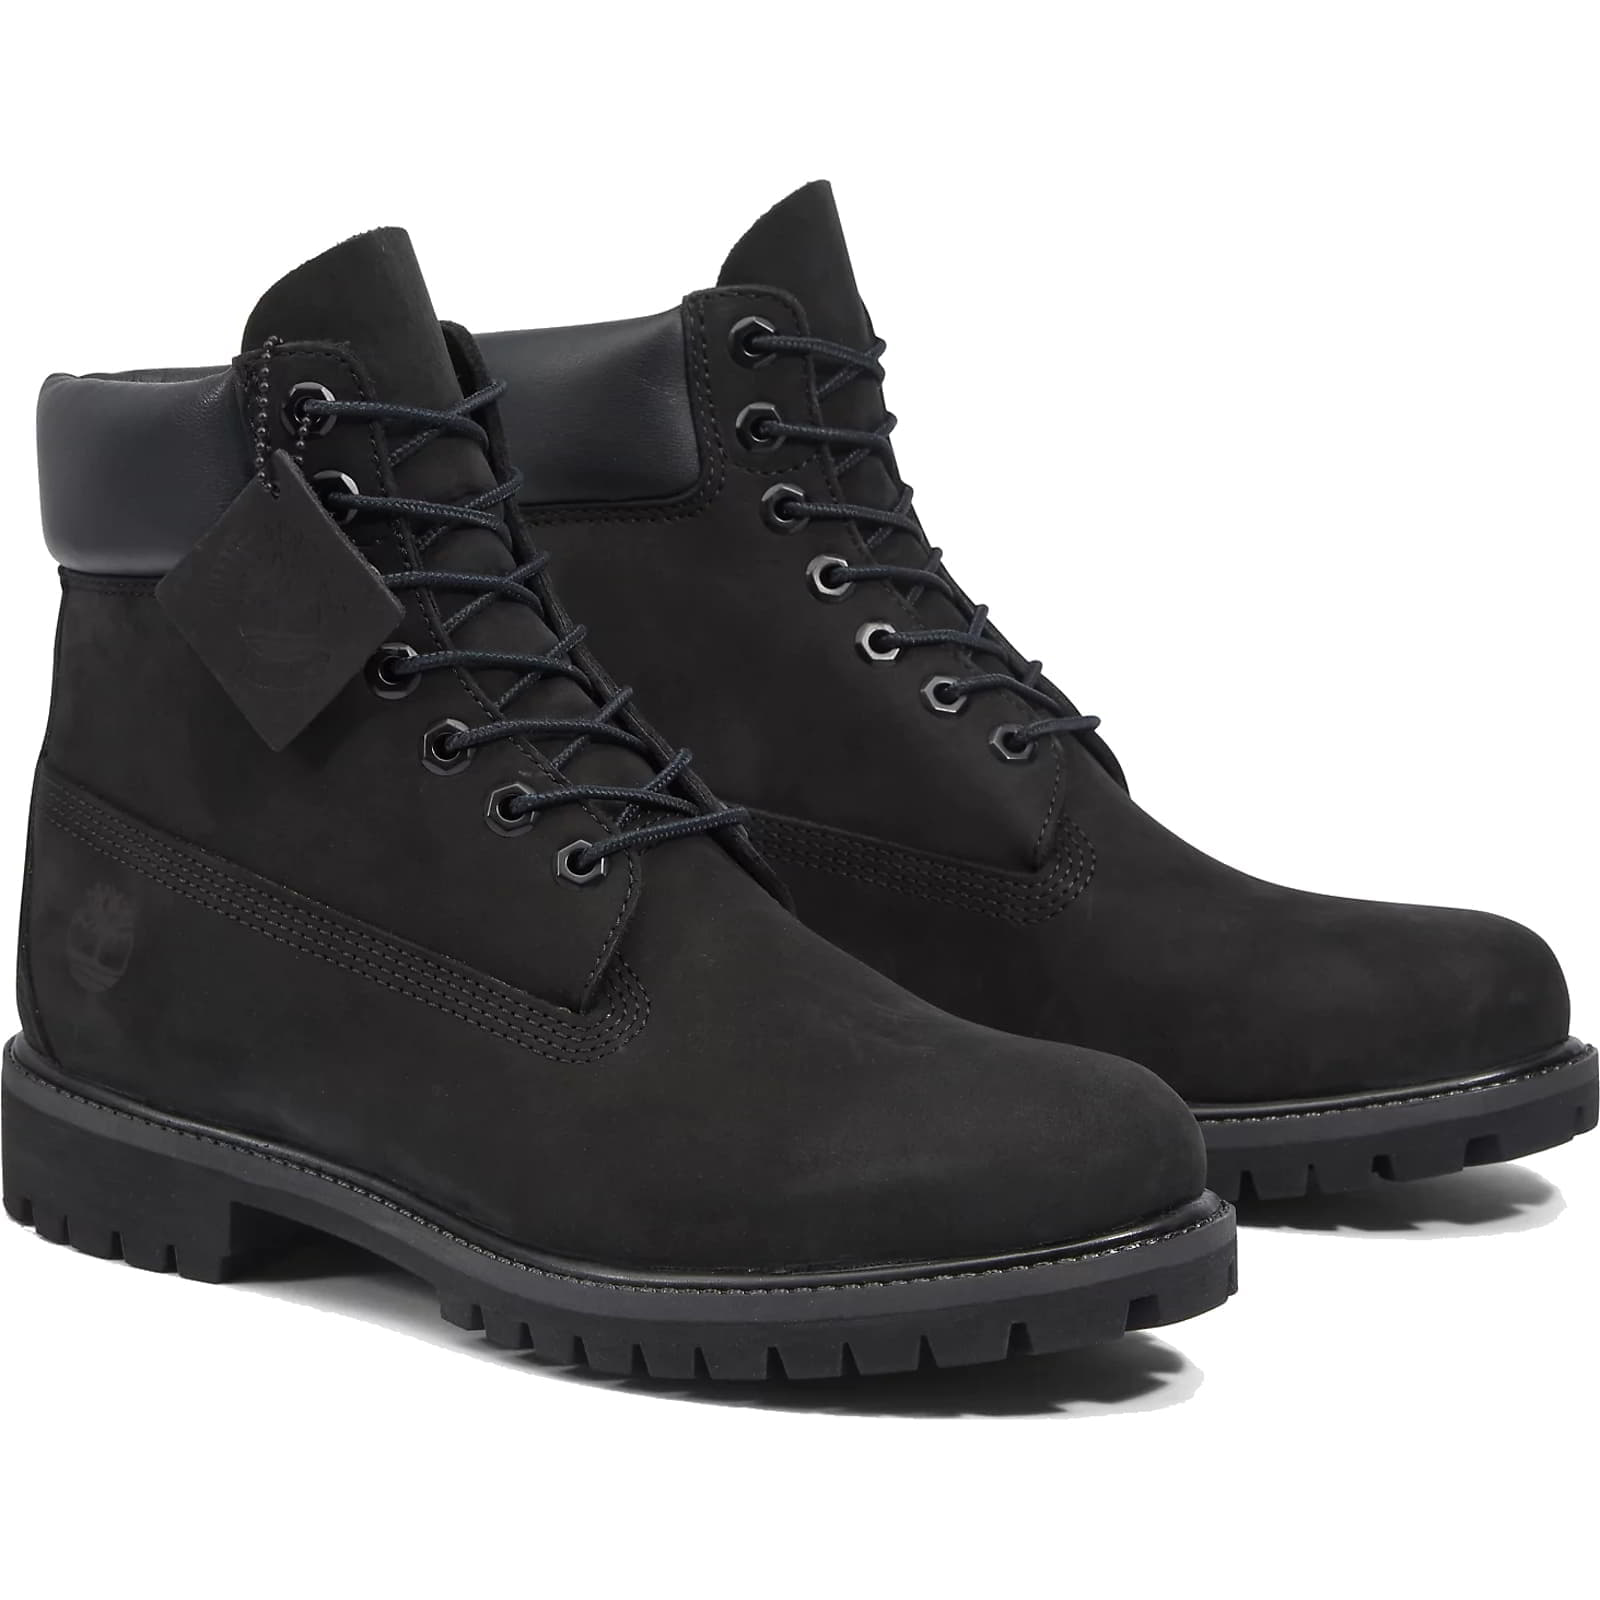 Timberland Men's 6 Inch Premium Black Classic Wide Fit Waterproof Boots - UK 8